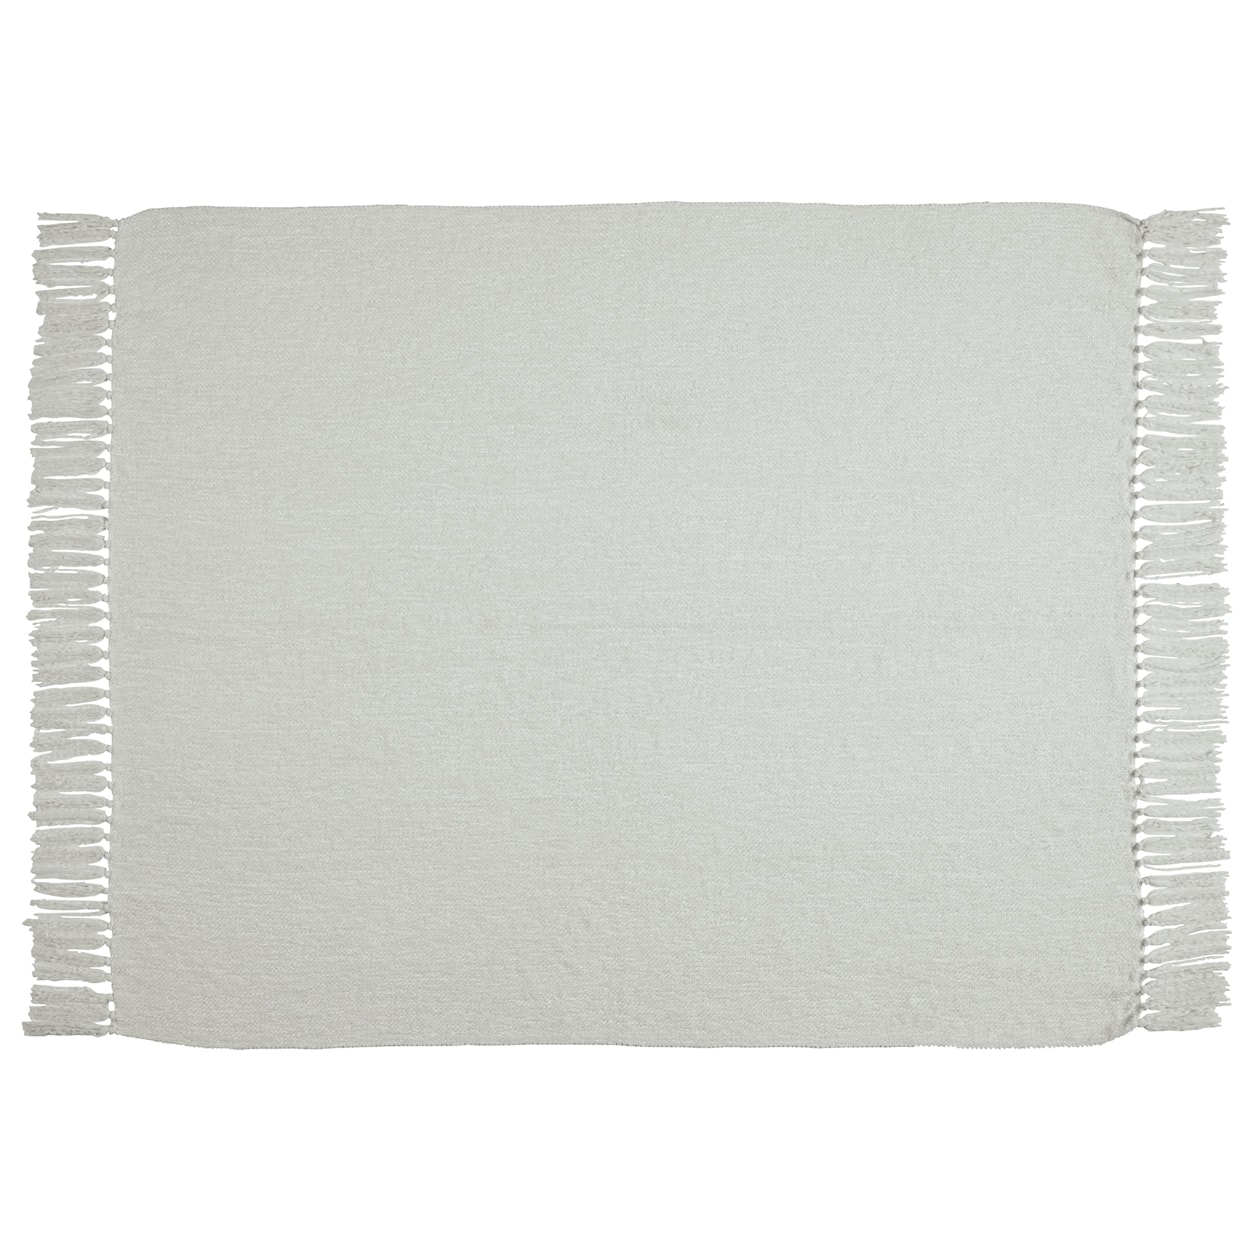 Benchcraft Tamish Throw Blanket (Set of 3)